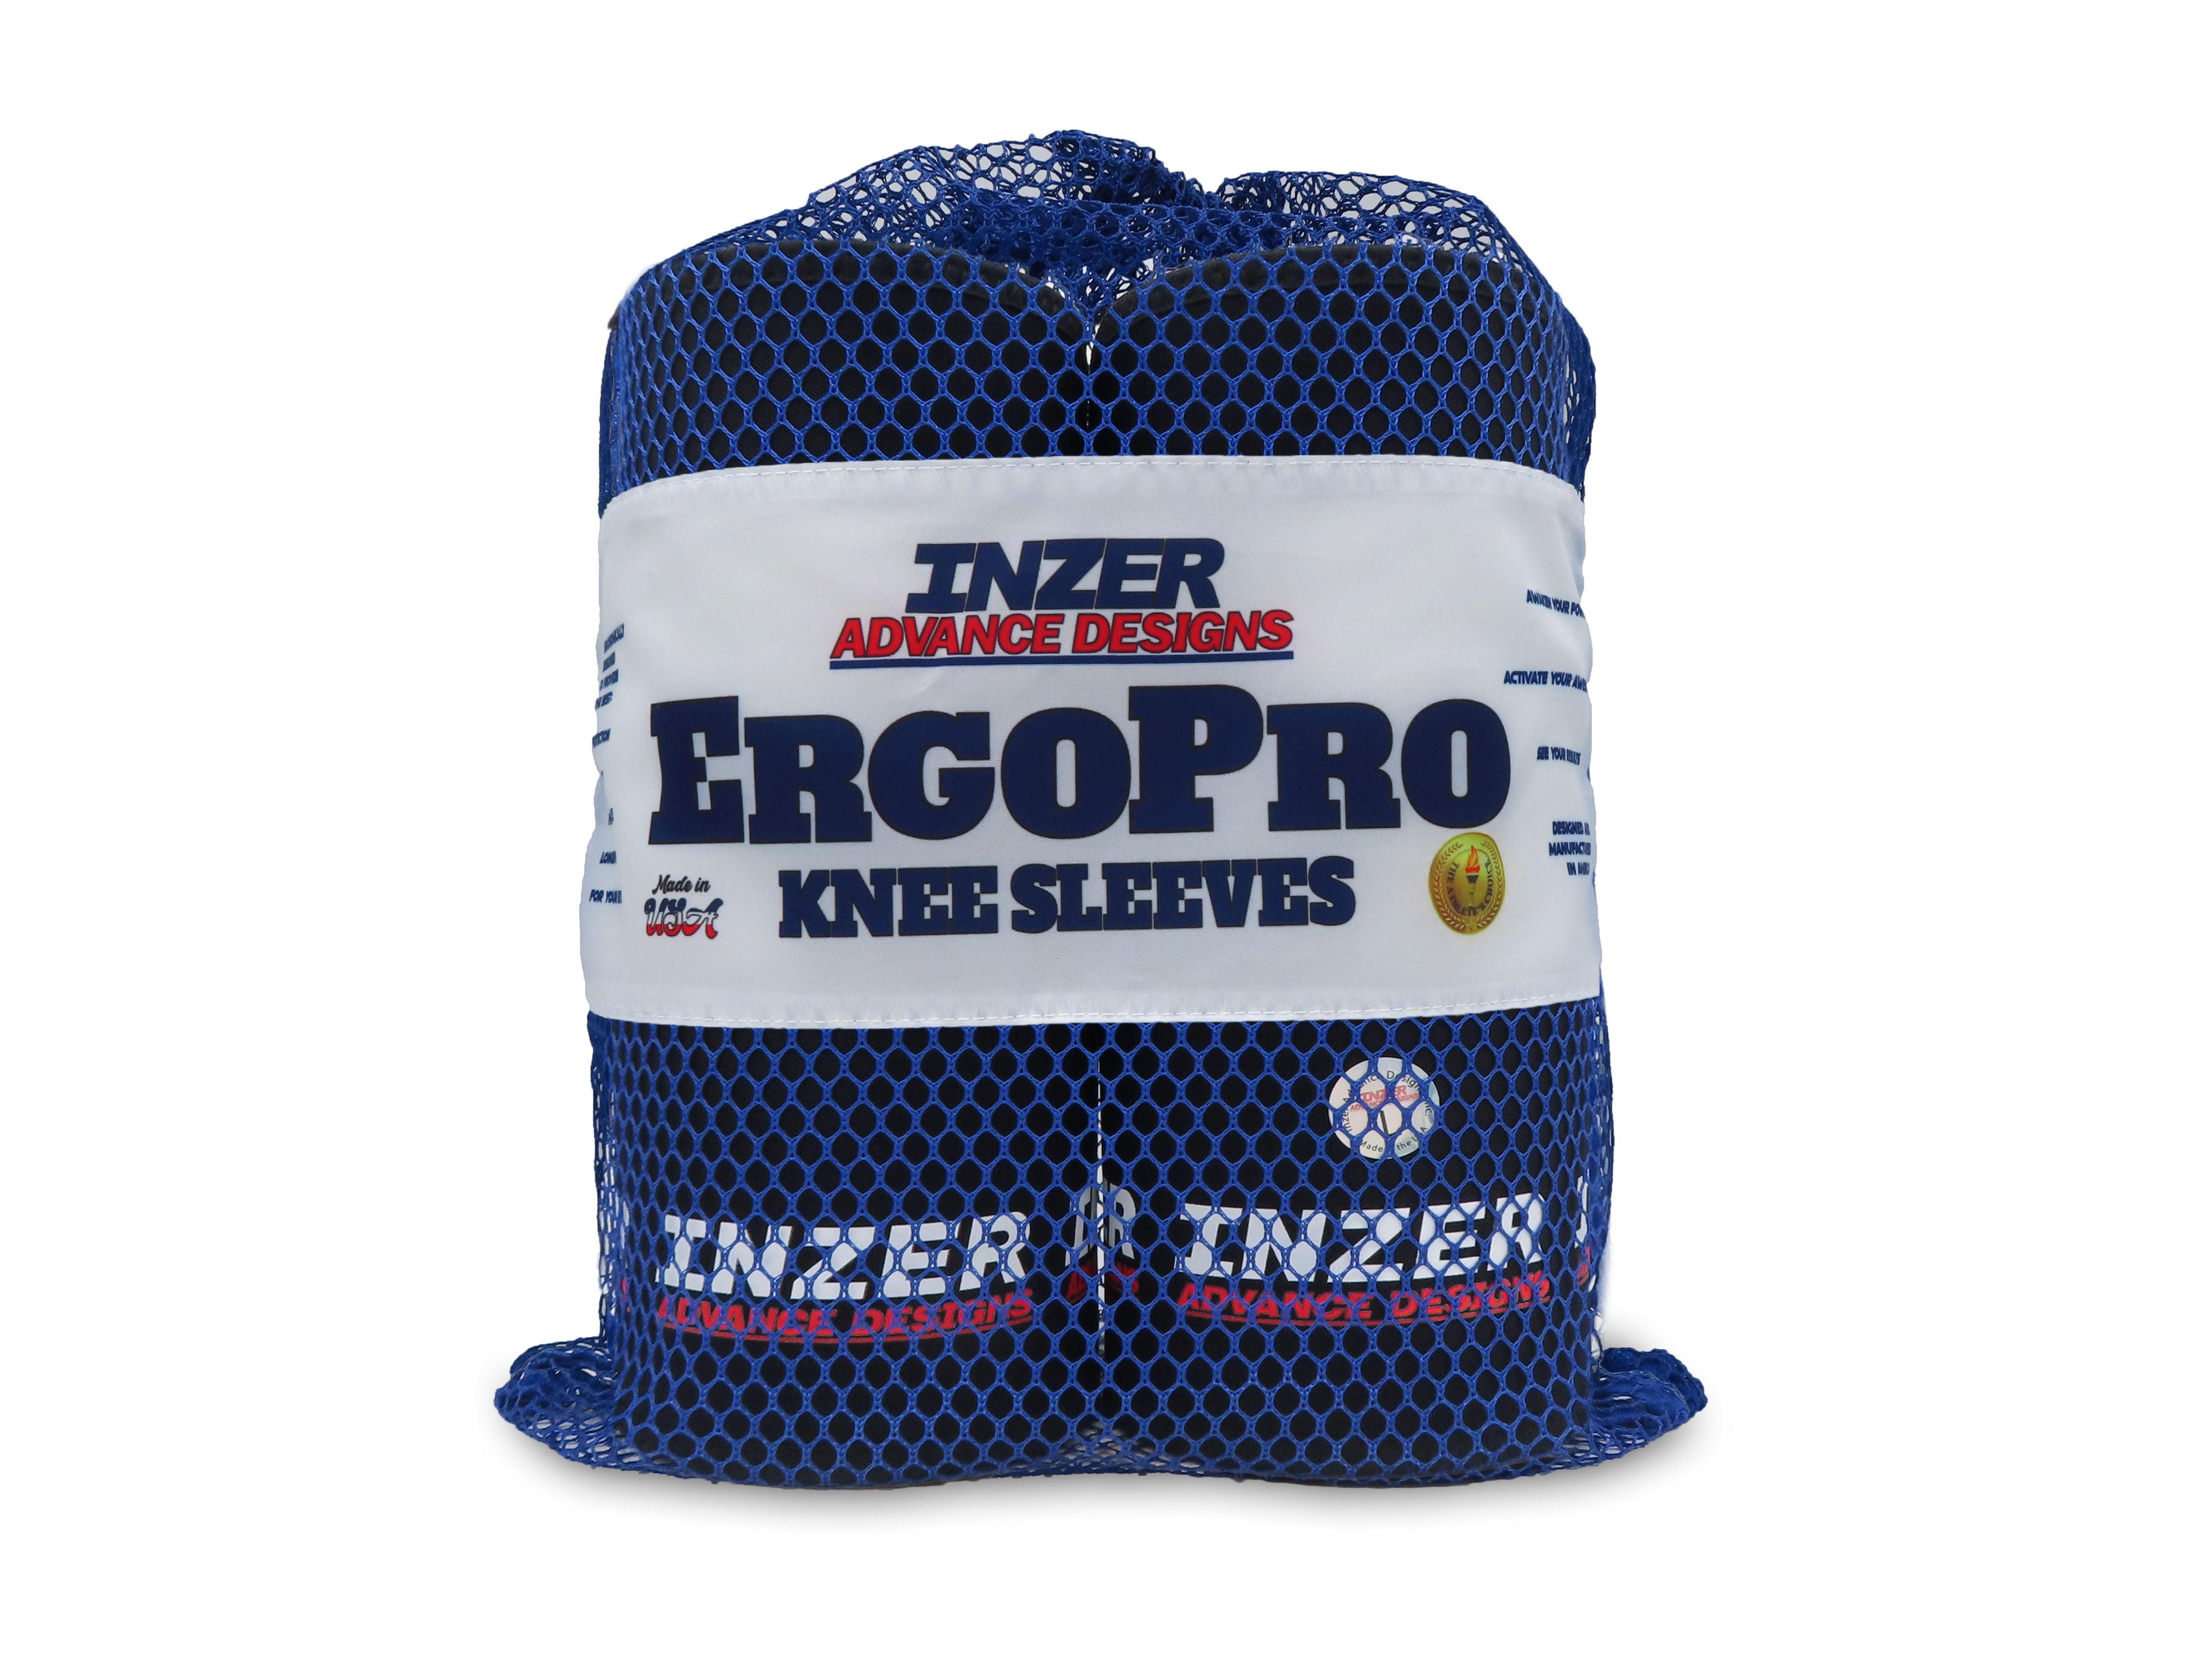 ErgoPro Knee Sleeves, The Ultra Performance Powerlifting Knee